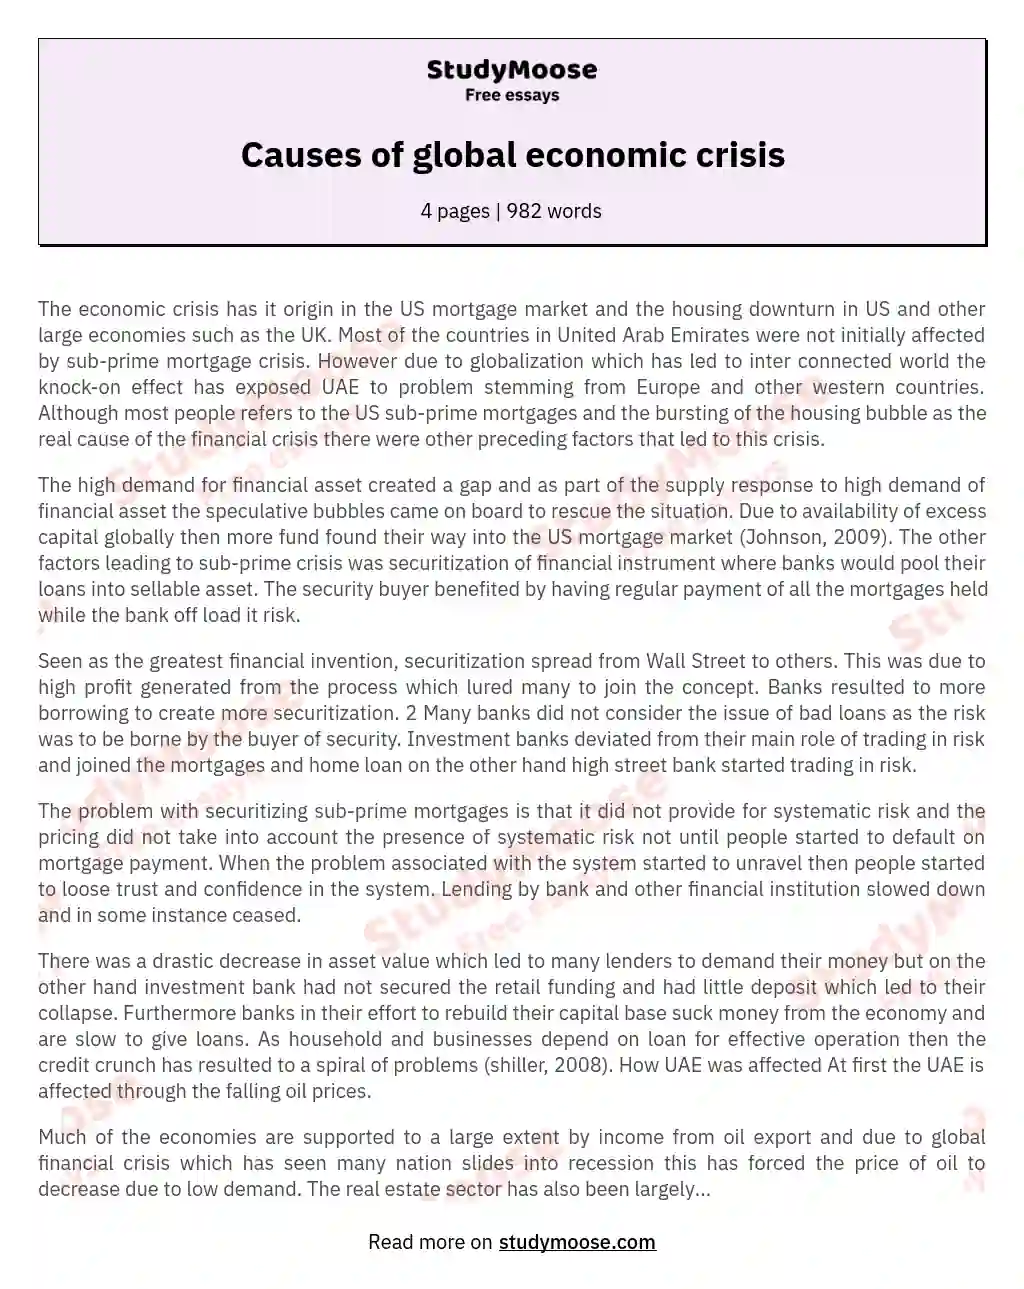 Causes of global economic crisis